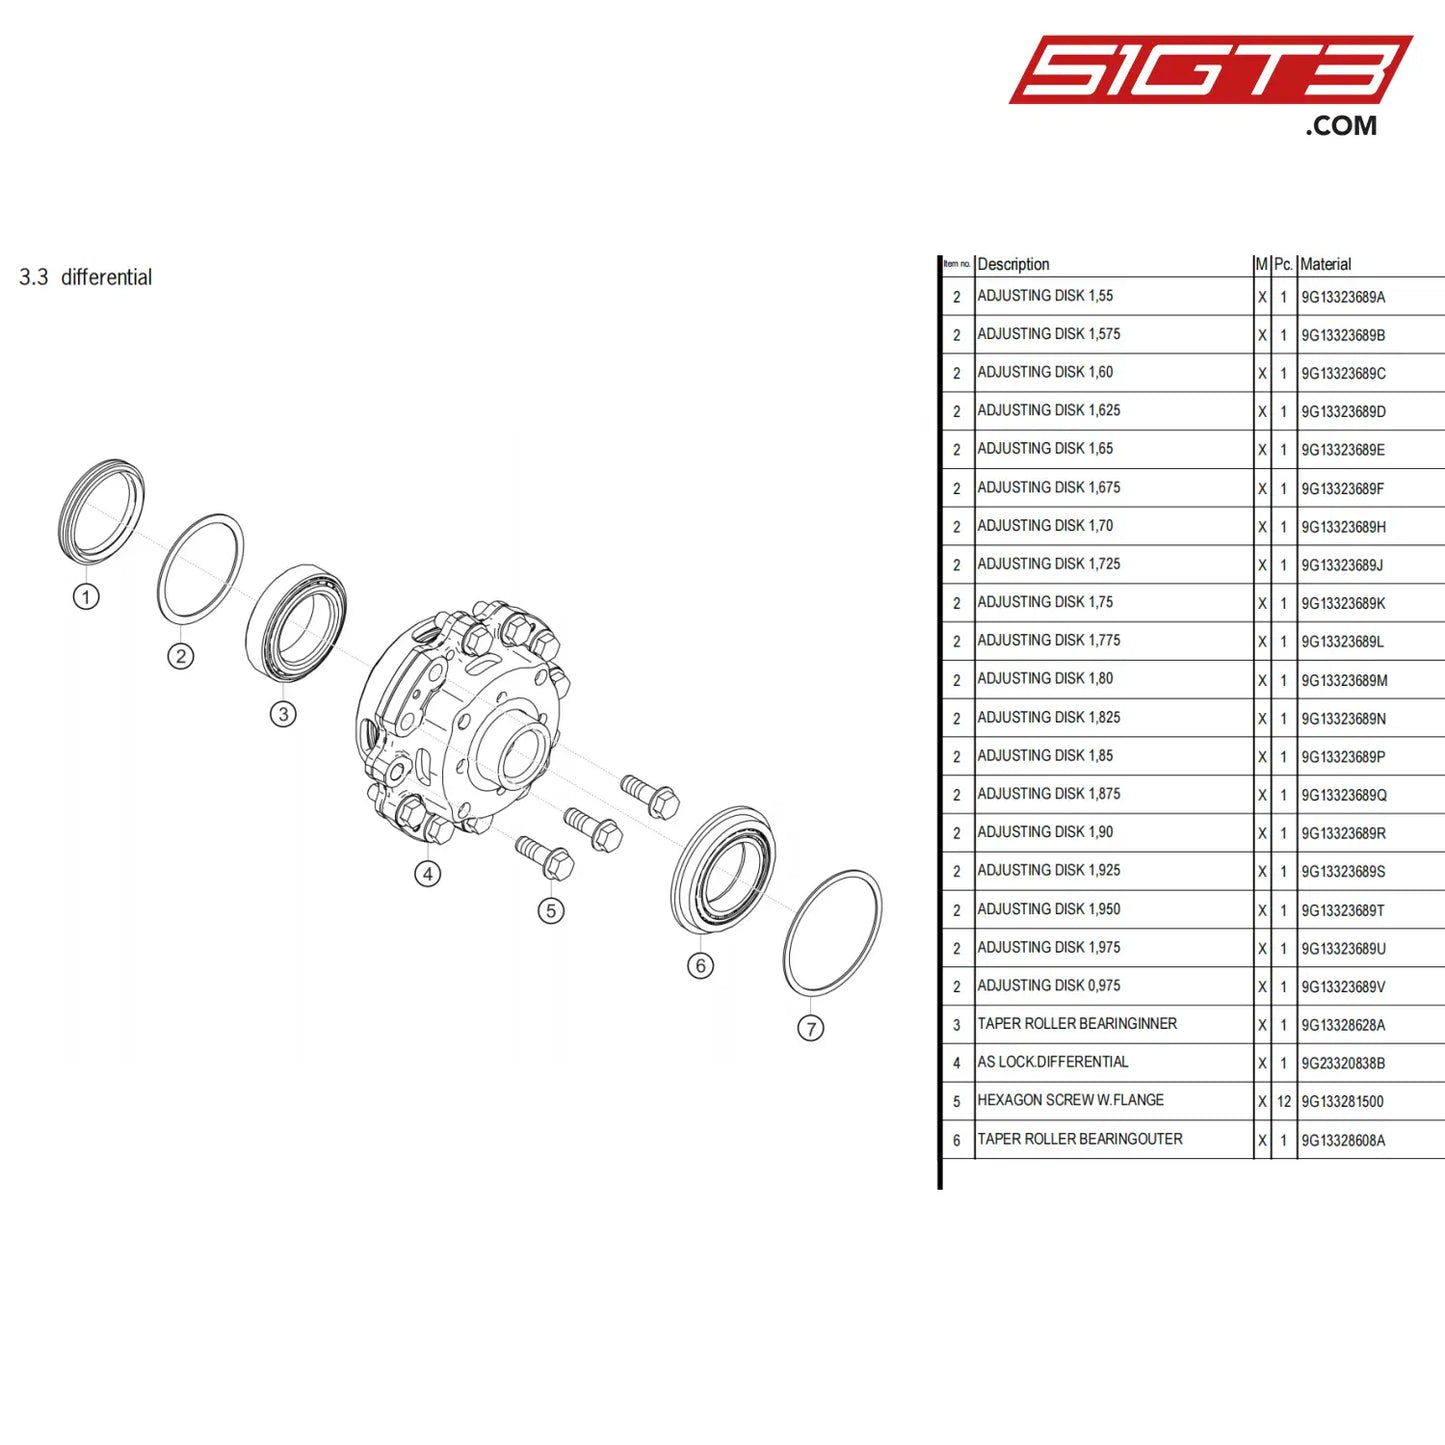 Adjusting Disk 1 150 - 9G13323669J [Porsche 718 Cayman Gt4 Clubsport] Differential